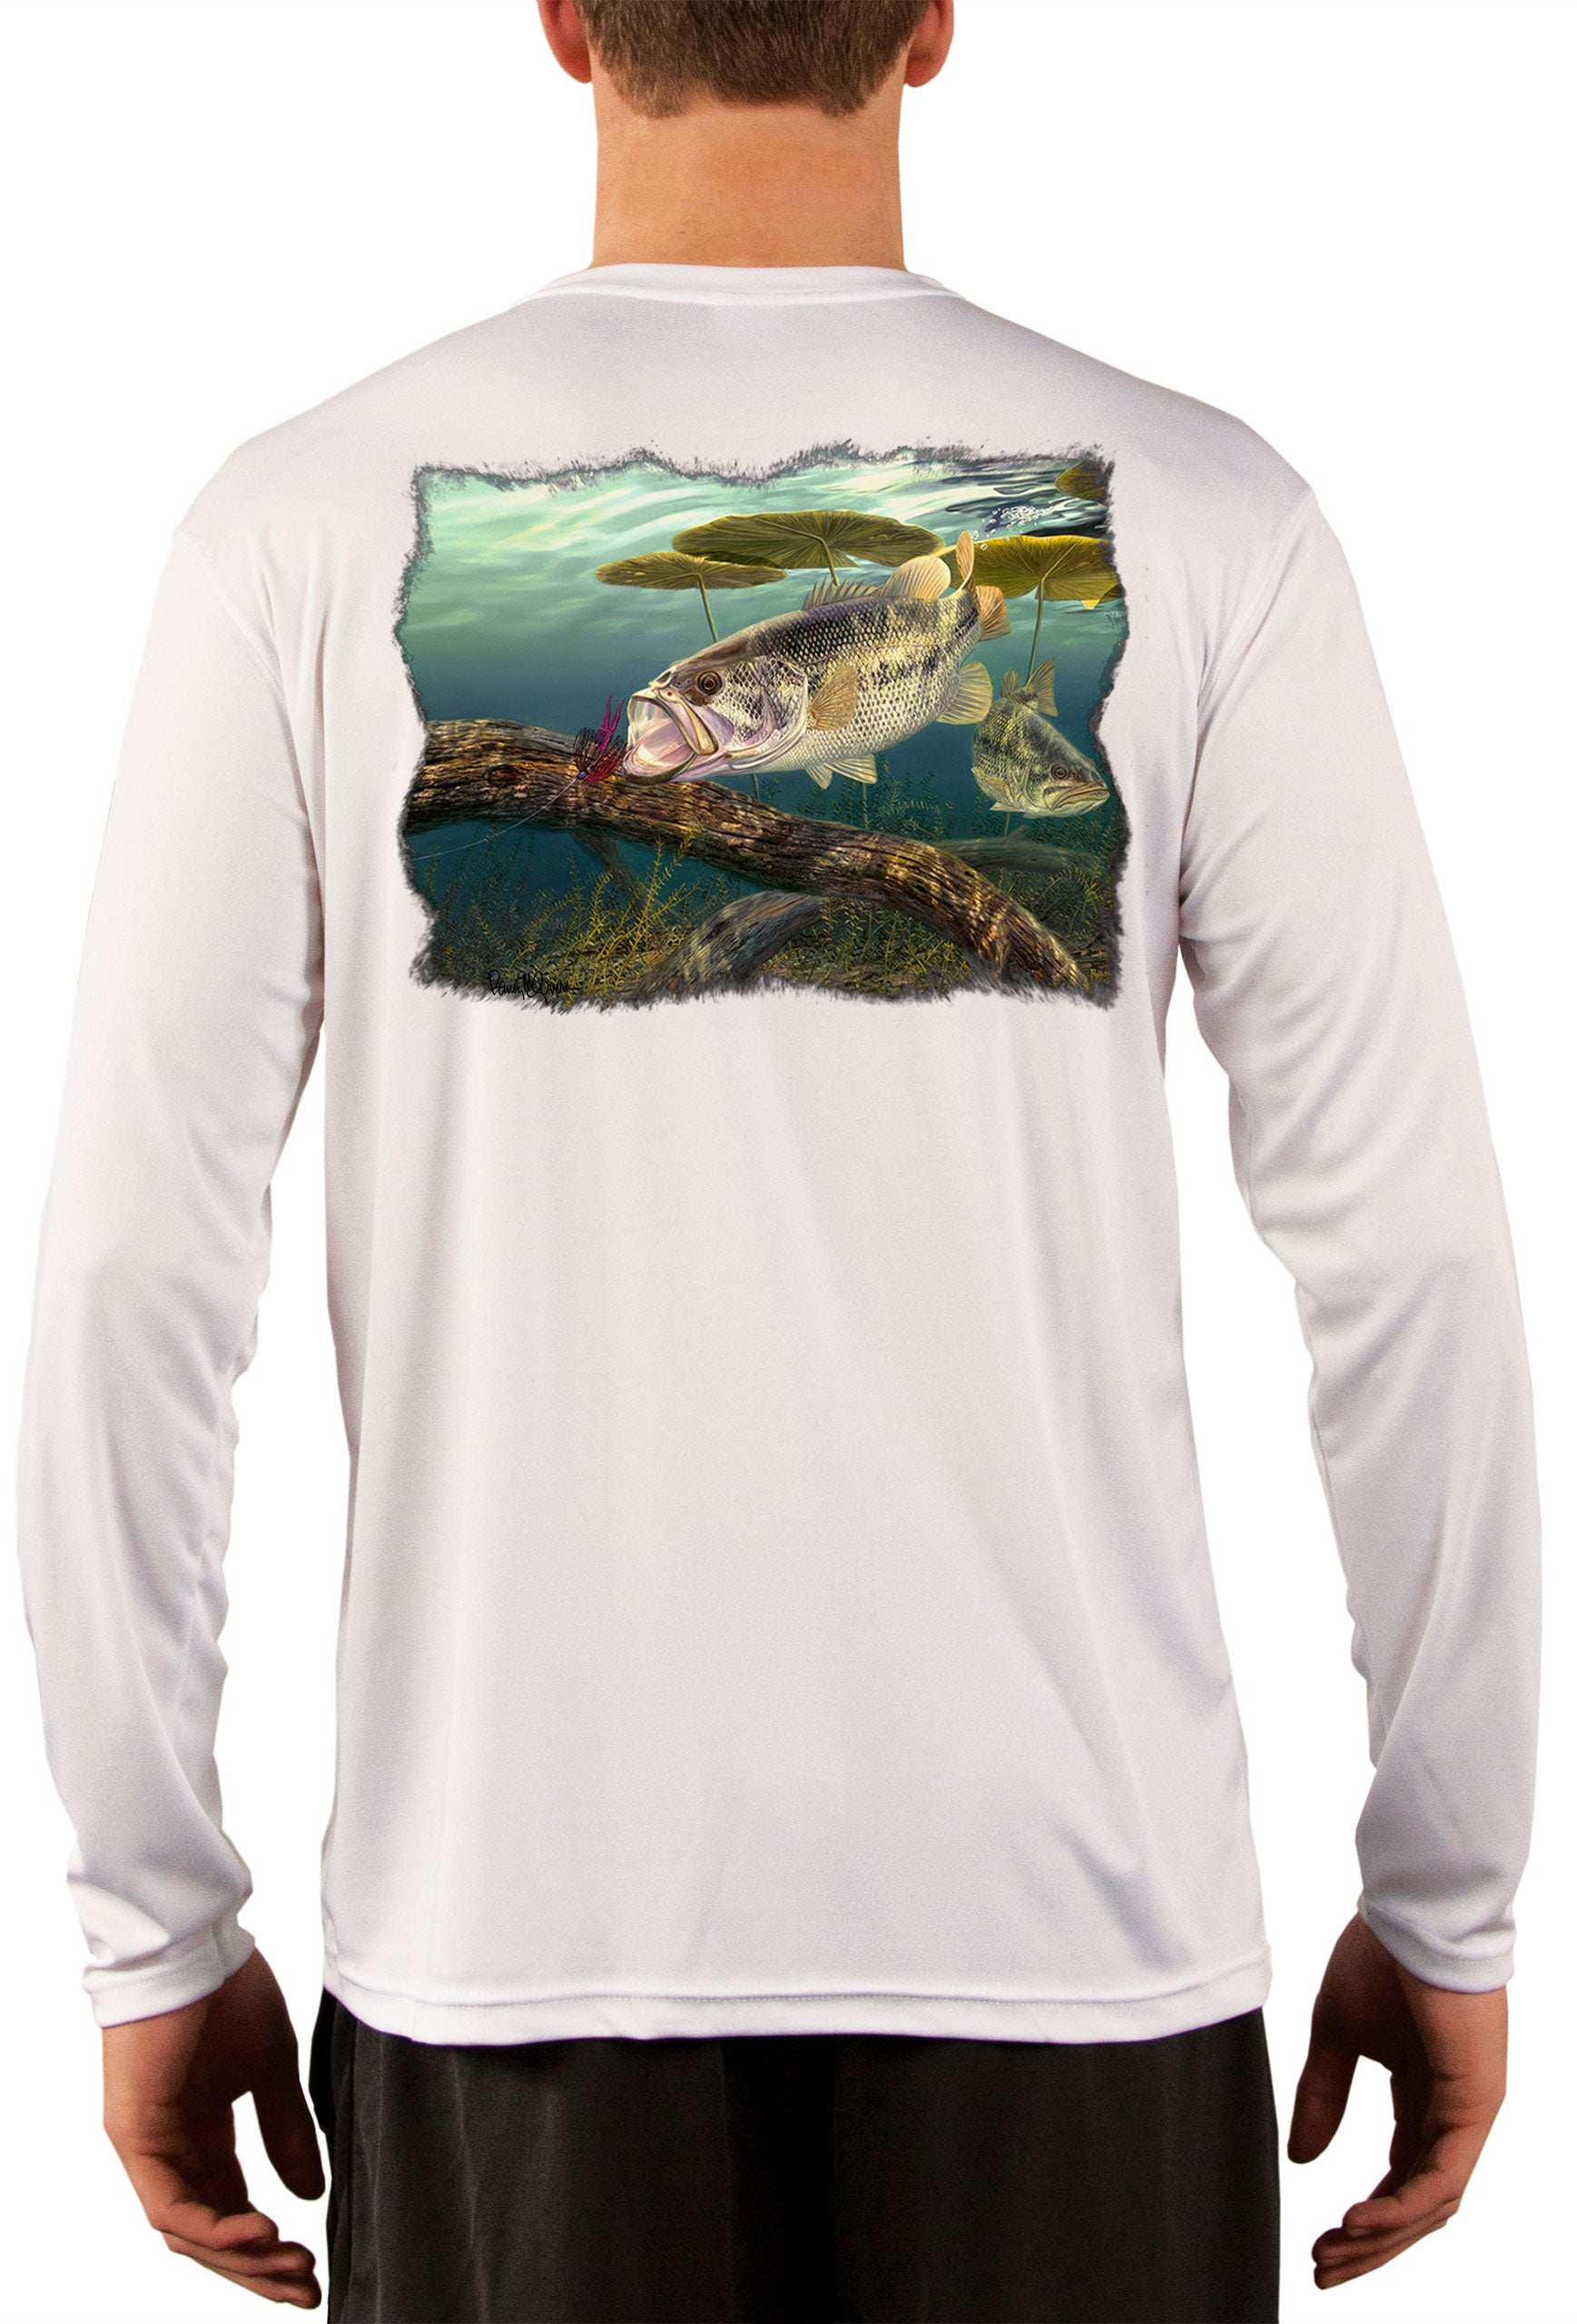 Skiff Life Large Mouth Bass Men's Fishing Shirts by Award Winning Arti